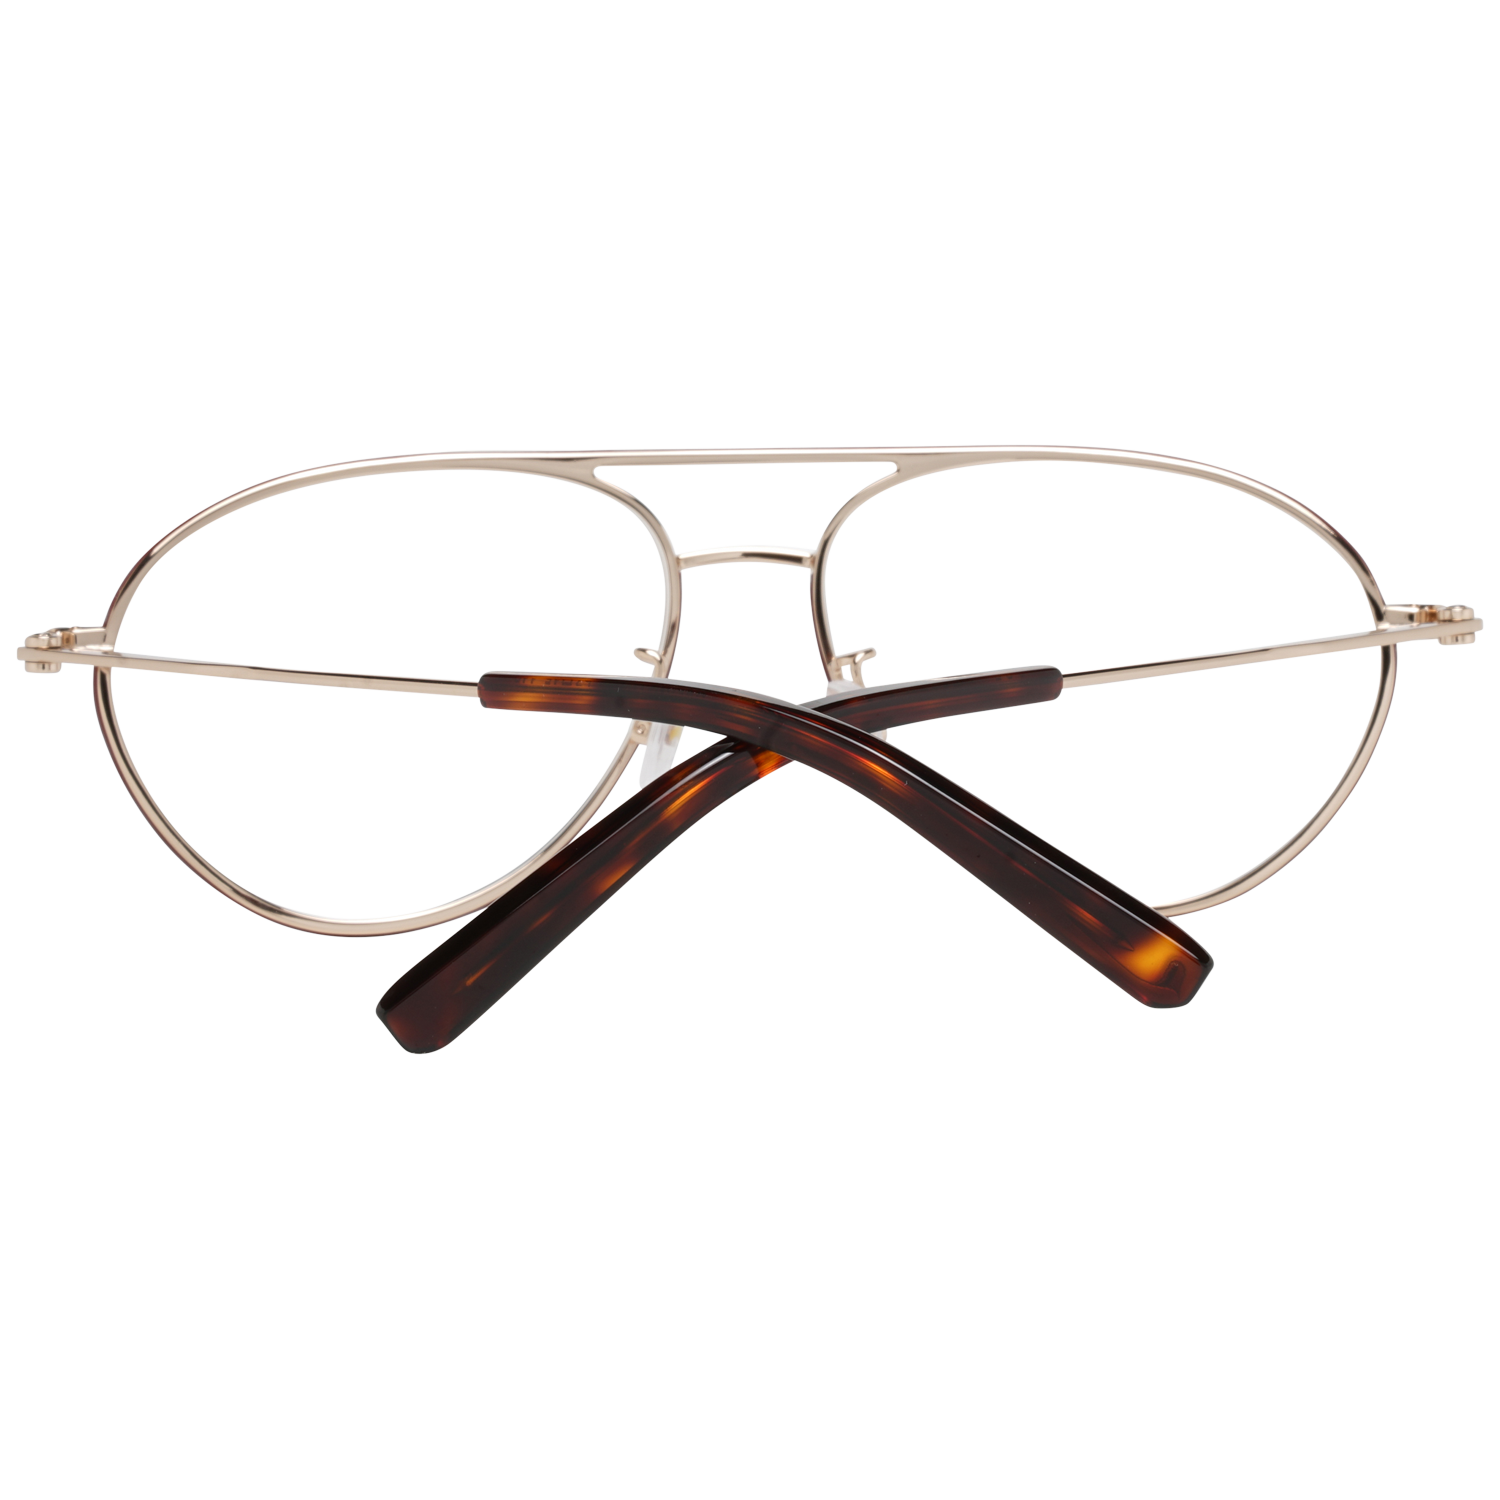 Bally Optical Frame Bally Eyeglasses Frames BY5013-H 028 Eyeglasses Eyewear UK USA Australia 